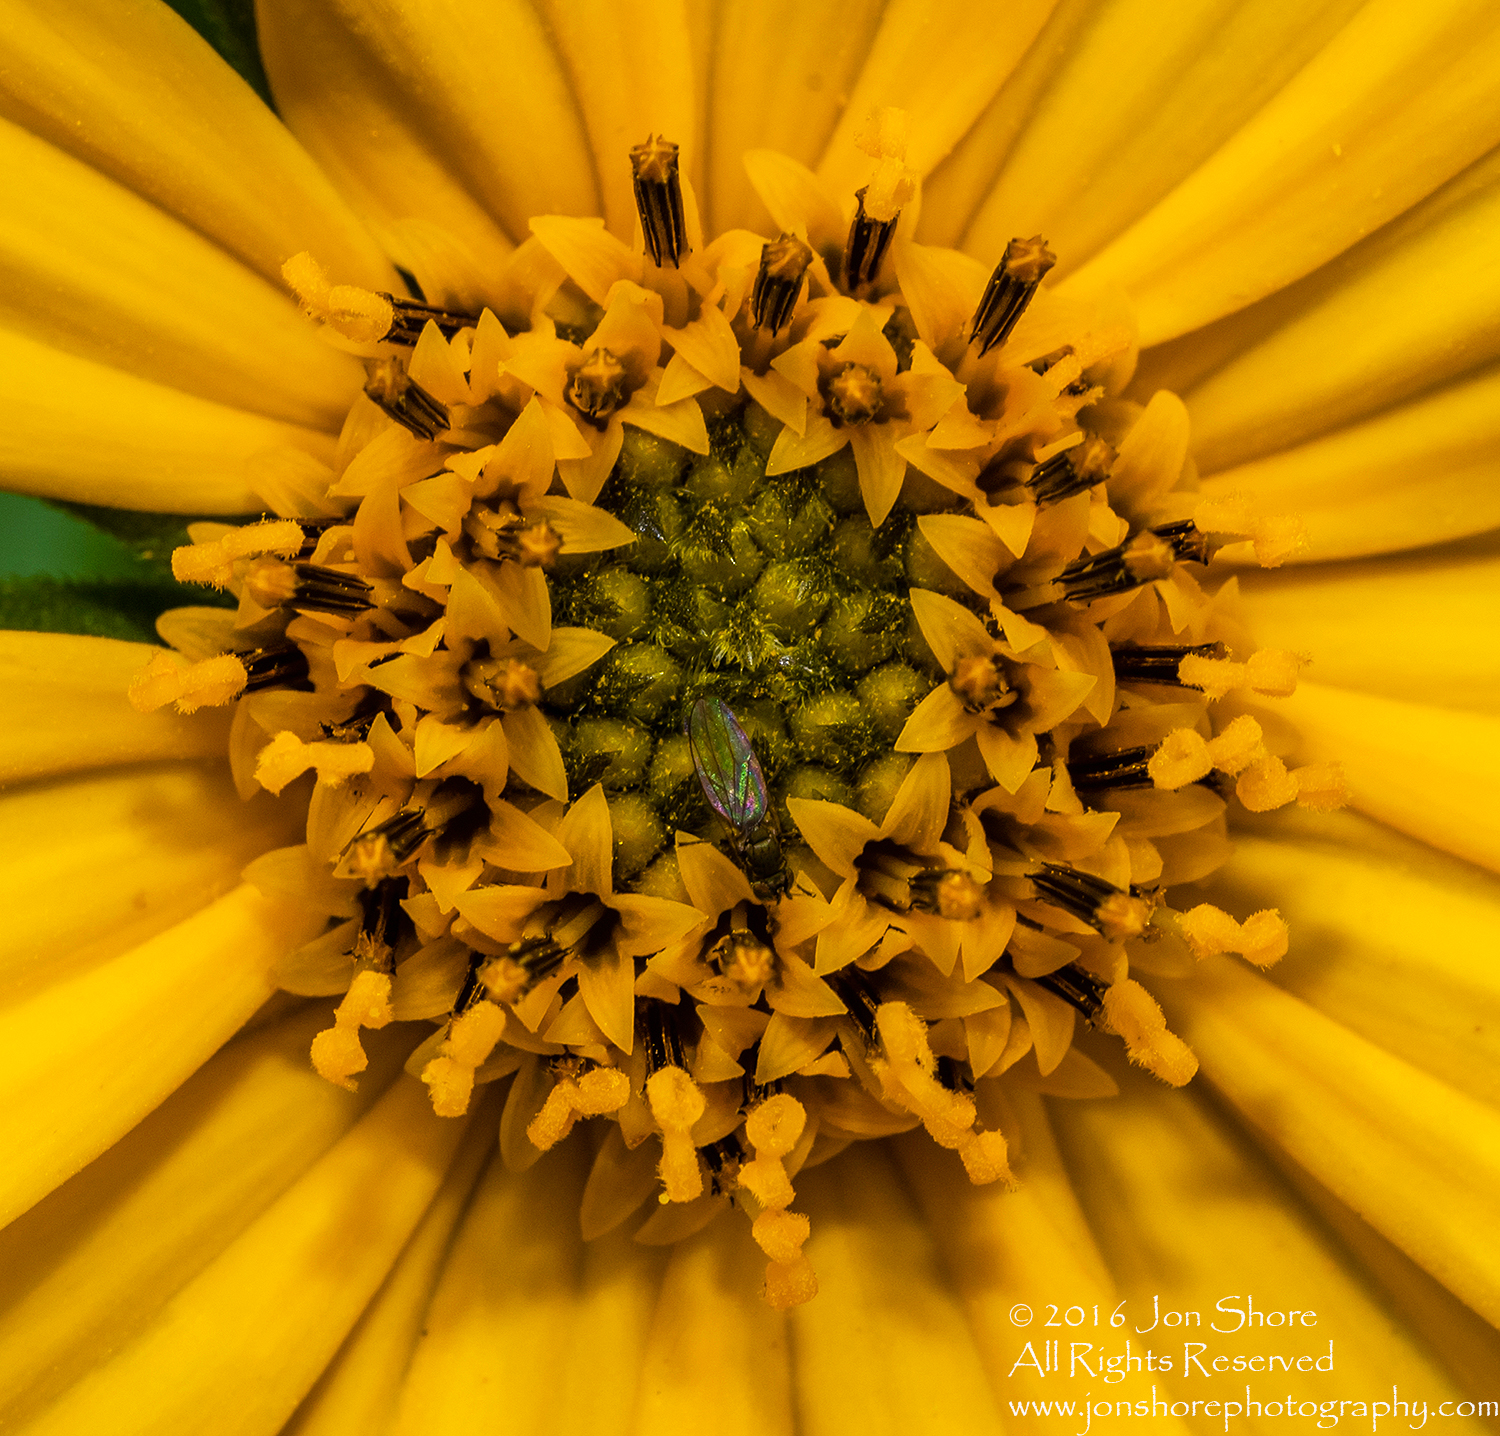 Tamarind Flower with Fly Close-up - Summer - Jurmala, Latvia 2016 Tamron 100mm Lens